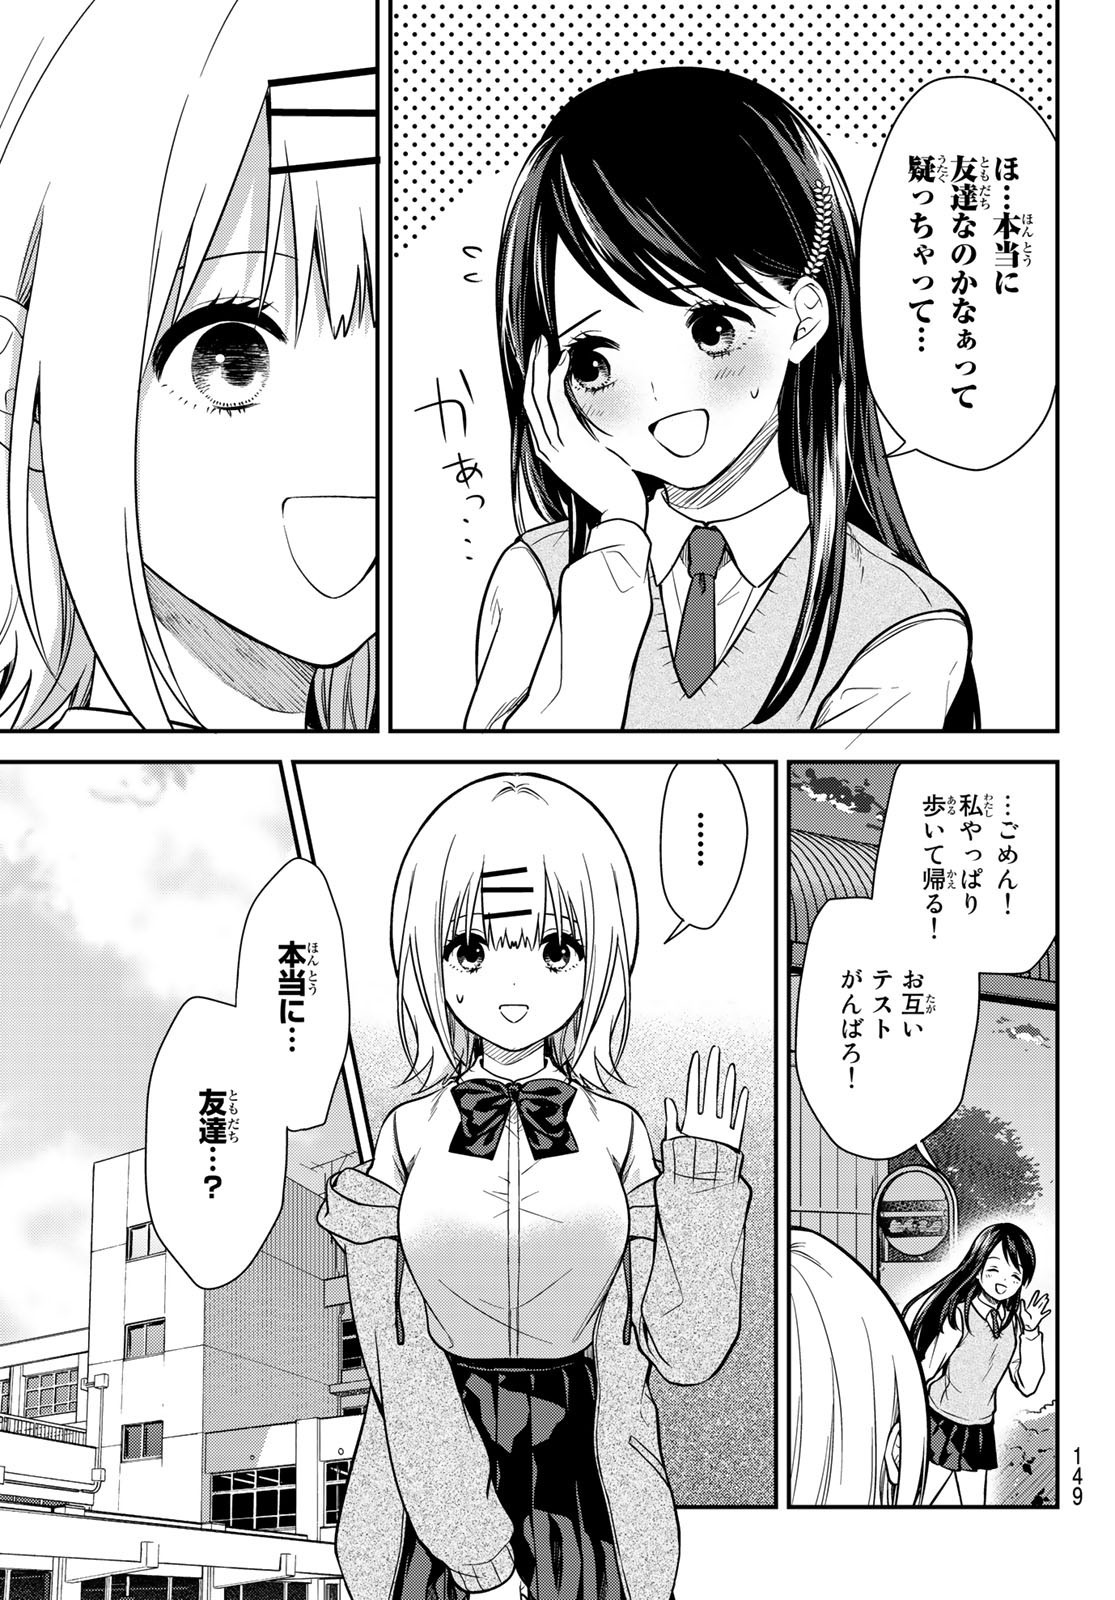 Kimi ga Megami Nara Ii no ni (I Wish You Were My Muse) - Chapter 004 - Page 5